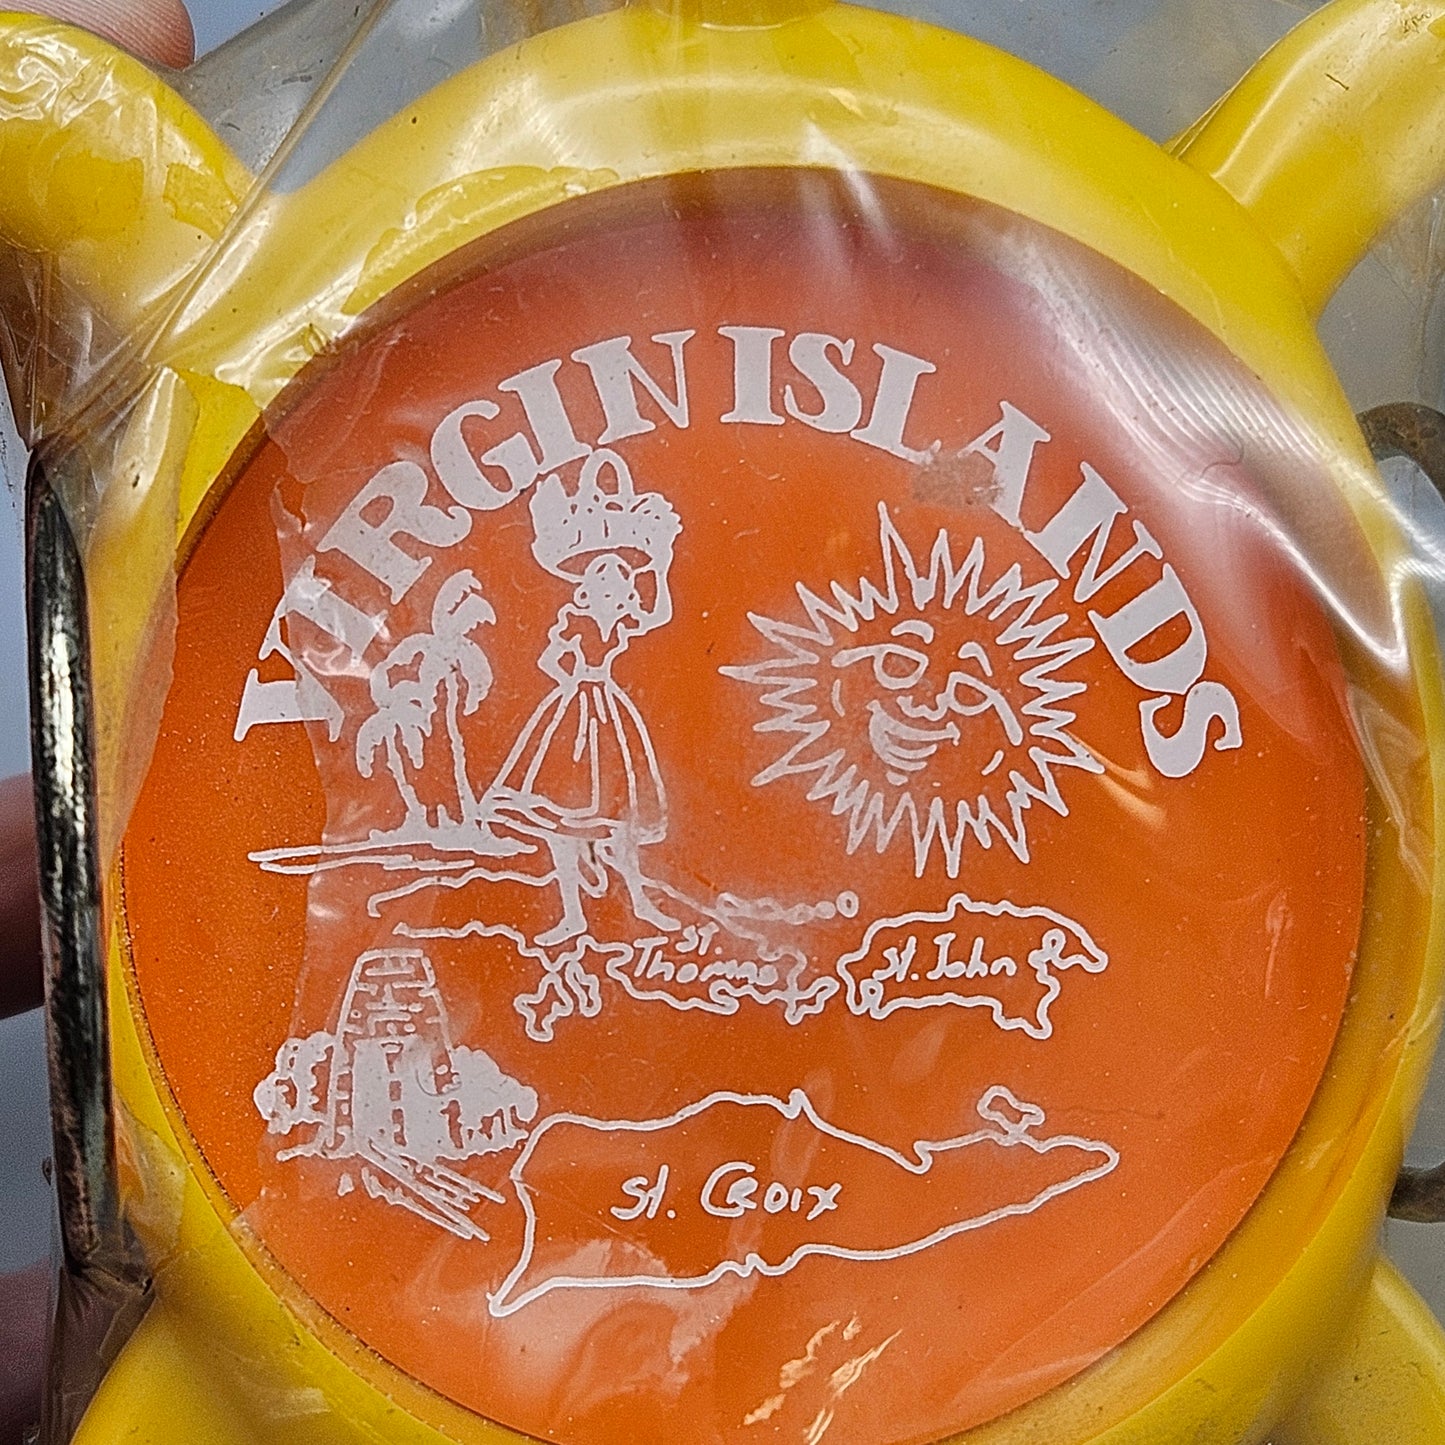 6 Vintage 1970's Plastic Turtles Virgin Islands Coasters Orange & Yellow with Holder